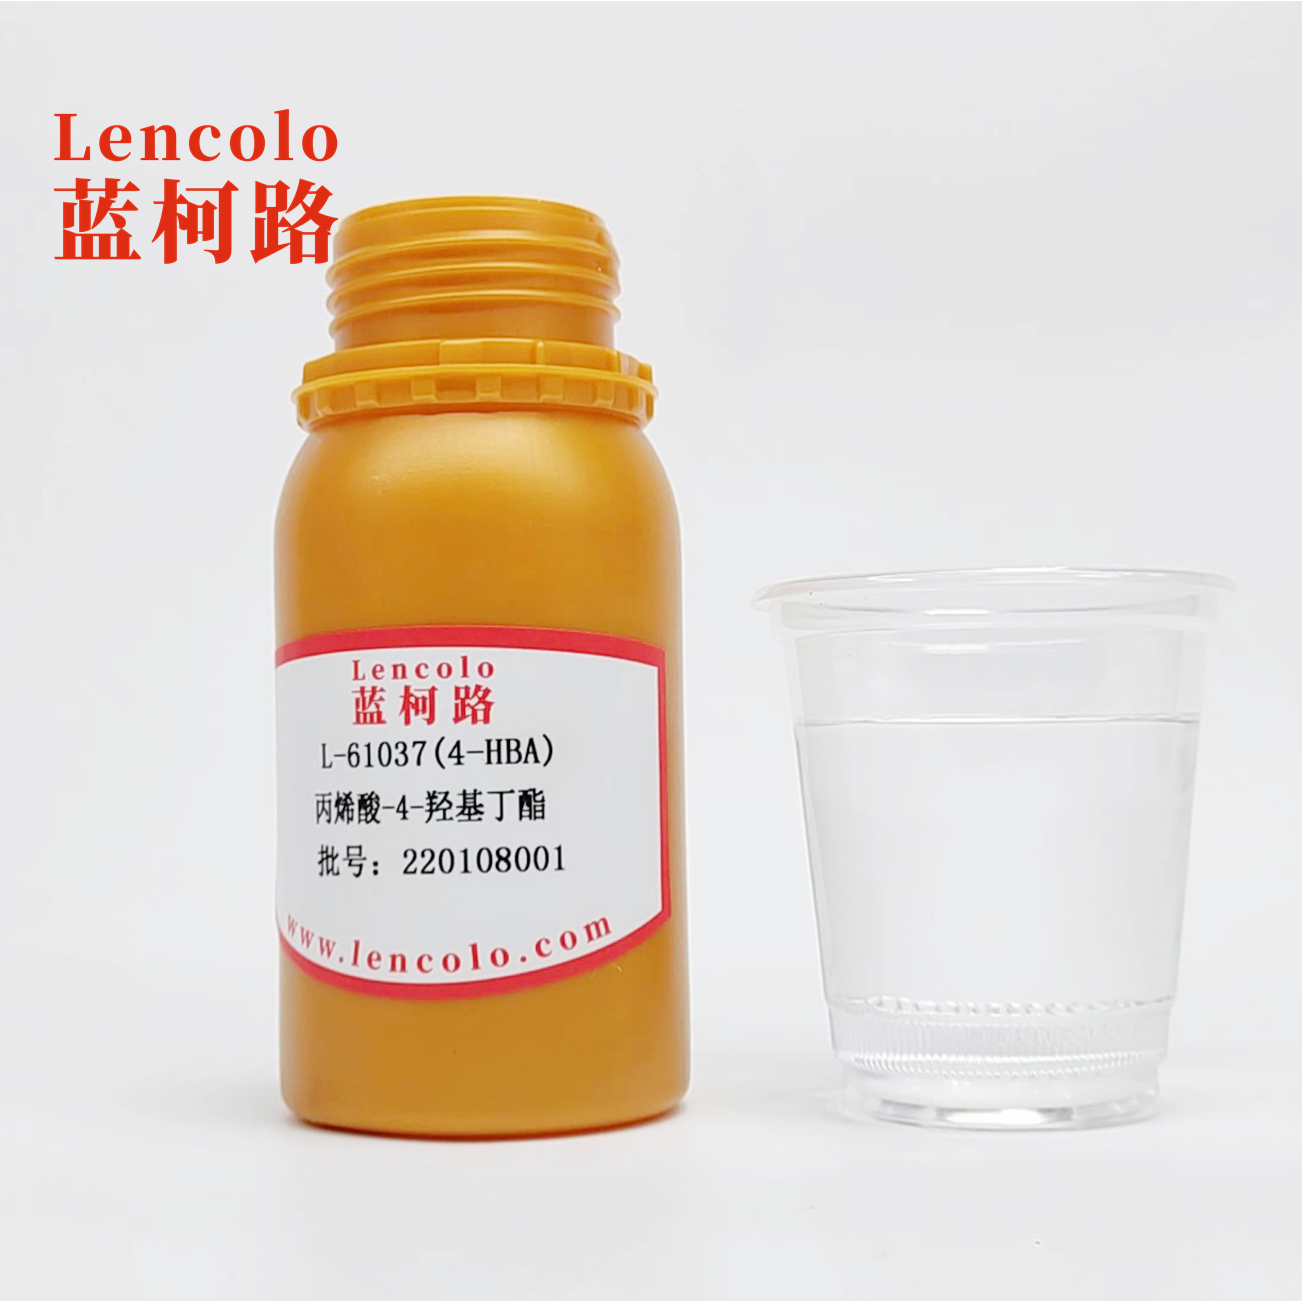 L-61037(4-HBA) 4-hydroxybutyl Acrylate